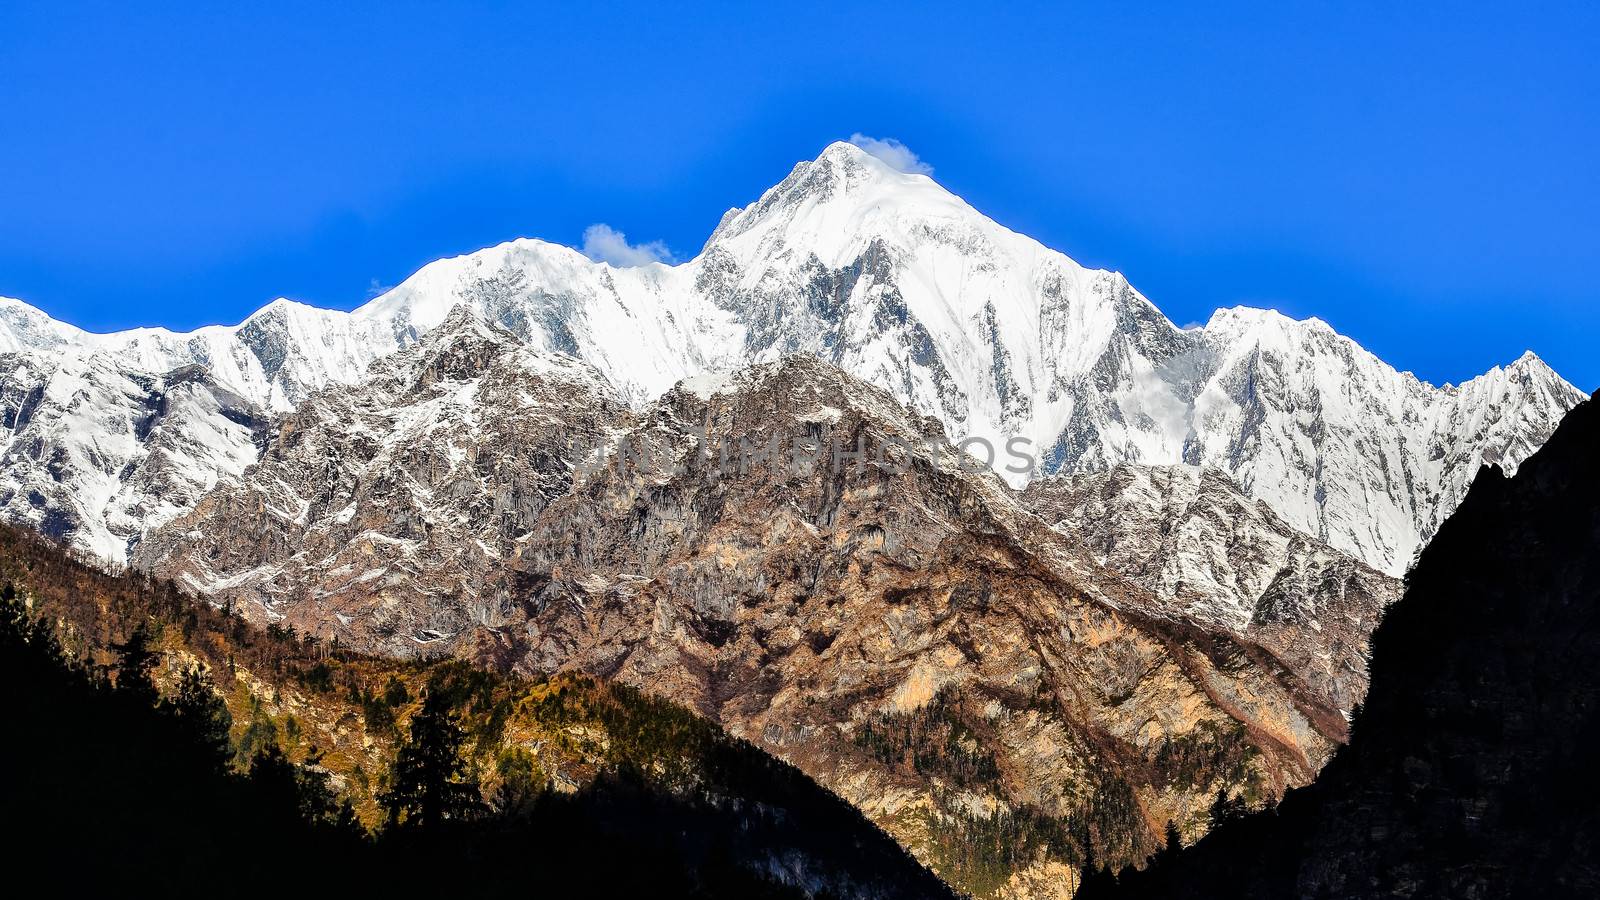 View of Annapurna II mountain peak during sunny day, Himalayas, Nepal